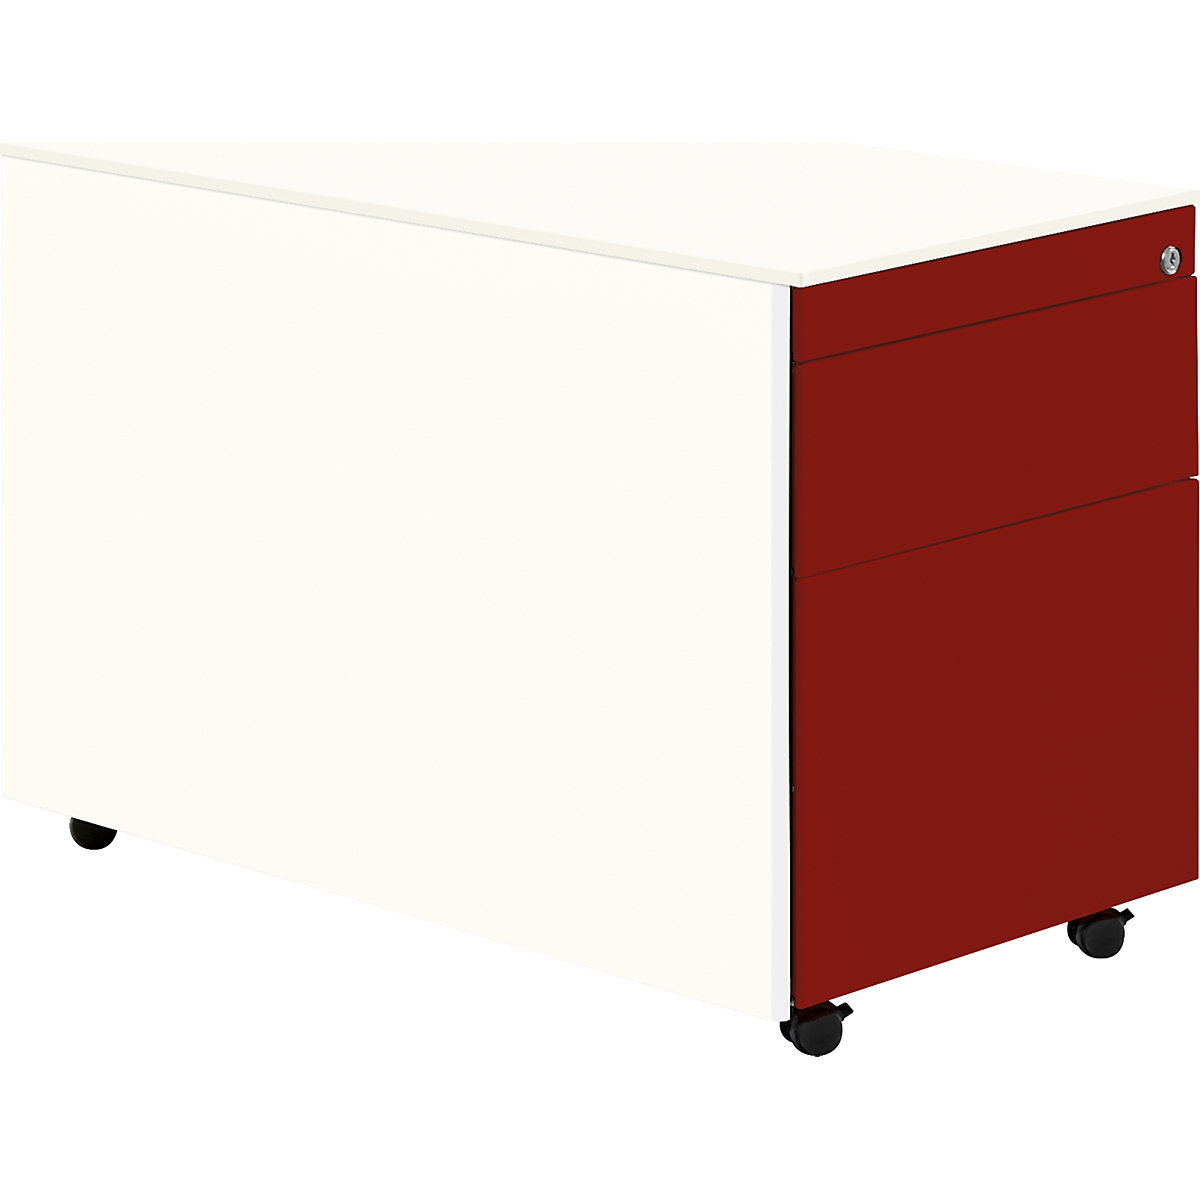 Zásuvkový kontejner s koly – mauser, v x h 570 x 800 mm, 1 zásuvka na materiál, 1 kartotéka pro závěsné složky, čistá bílá / rubínová / čistá bílá-12